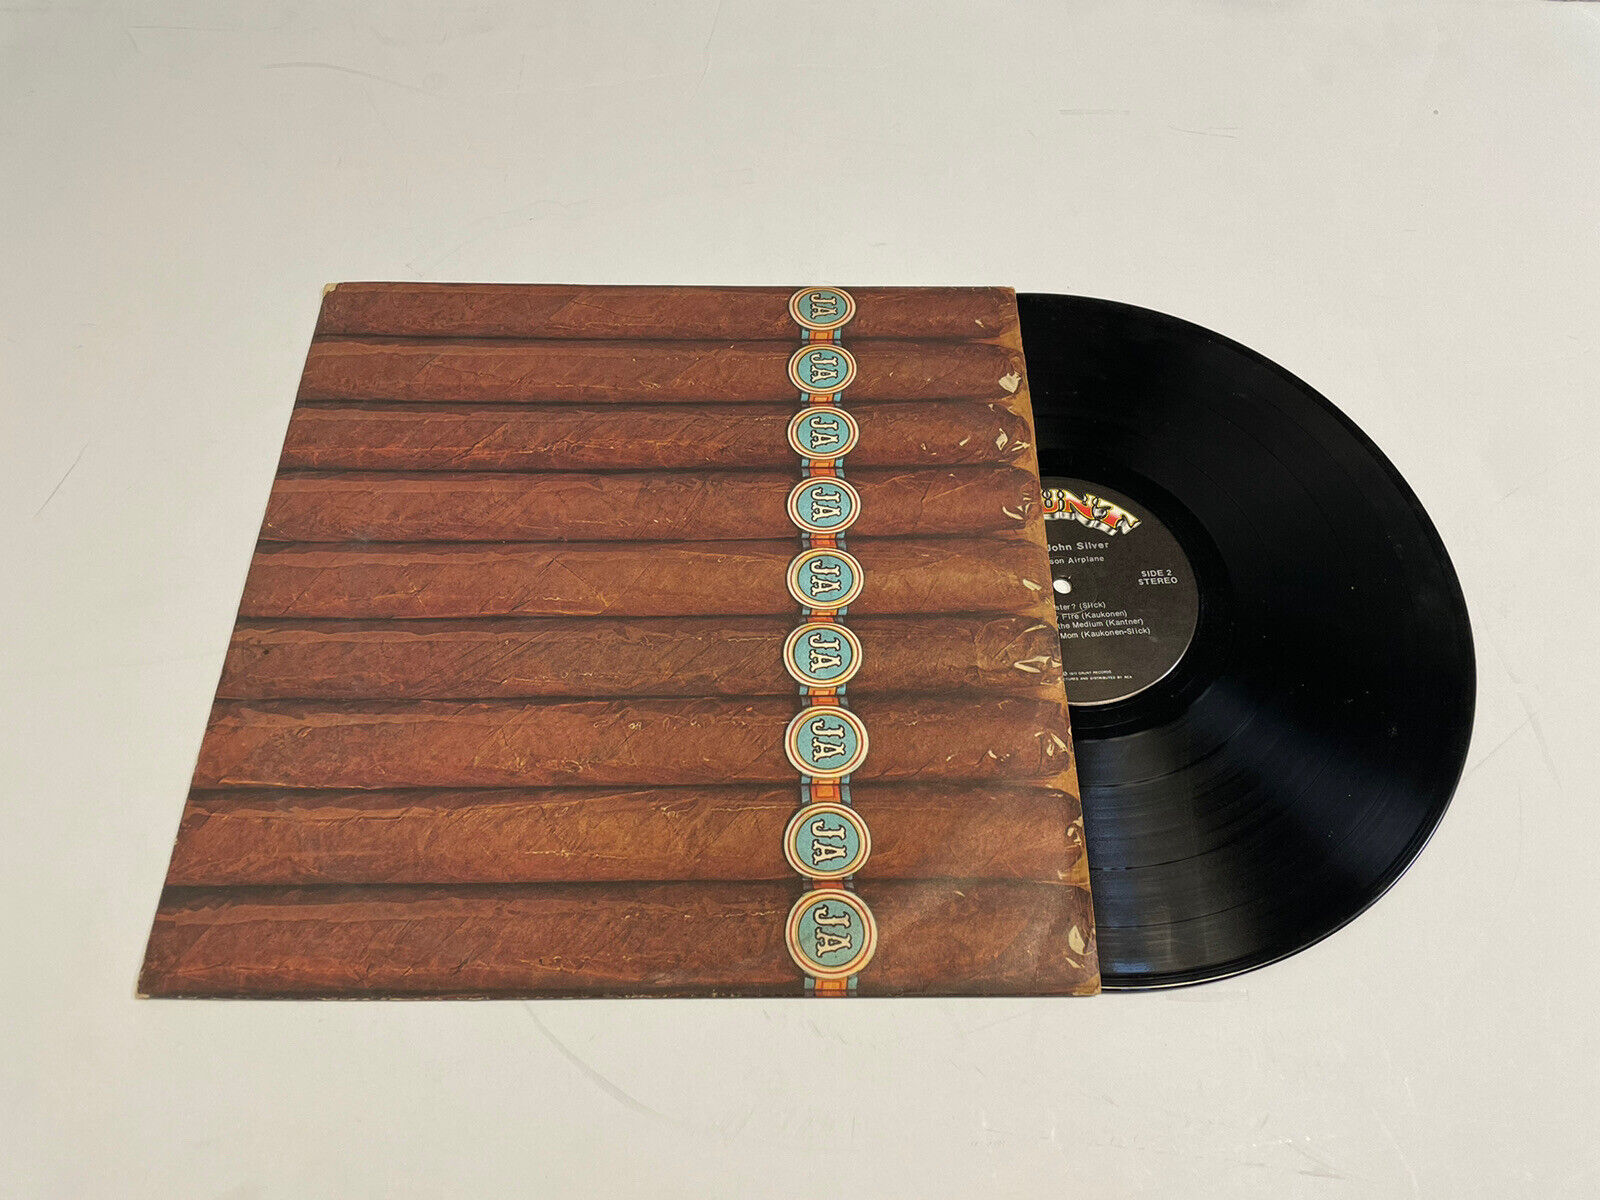 Rare Vintage Jefferson Airplane Long John Silver Vinyl Record LP Album FTR 1007